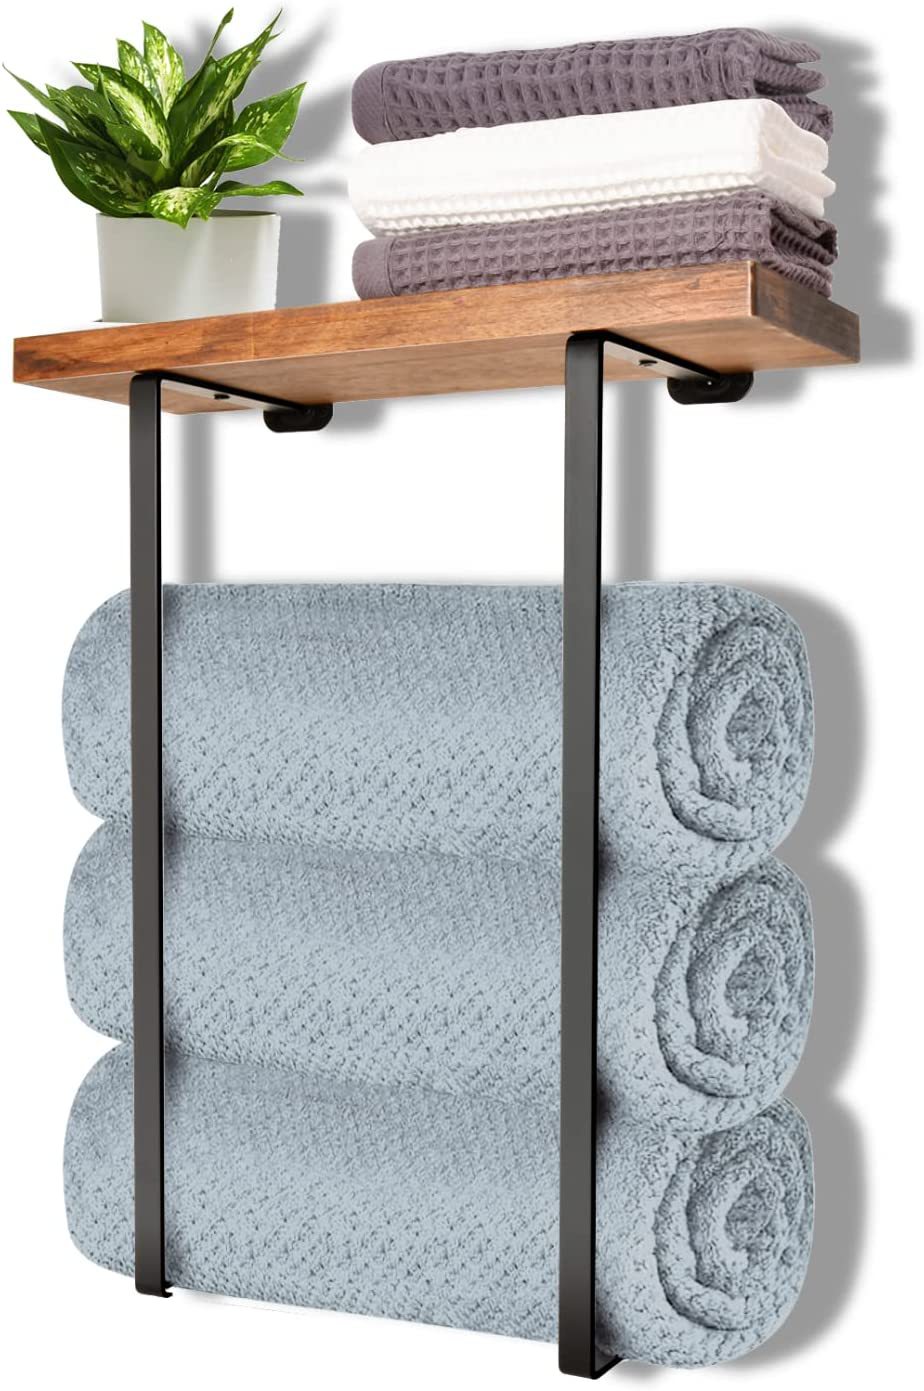 Towel Racks for Bathroom Wall Mounted, Wooden Yoga Mat Storage